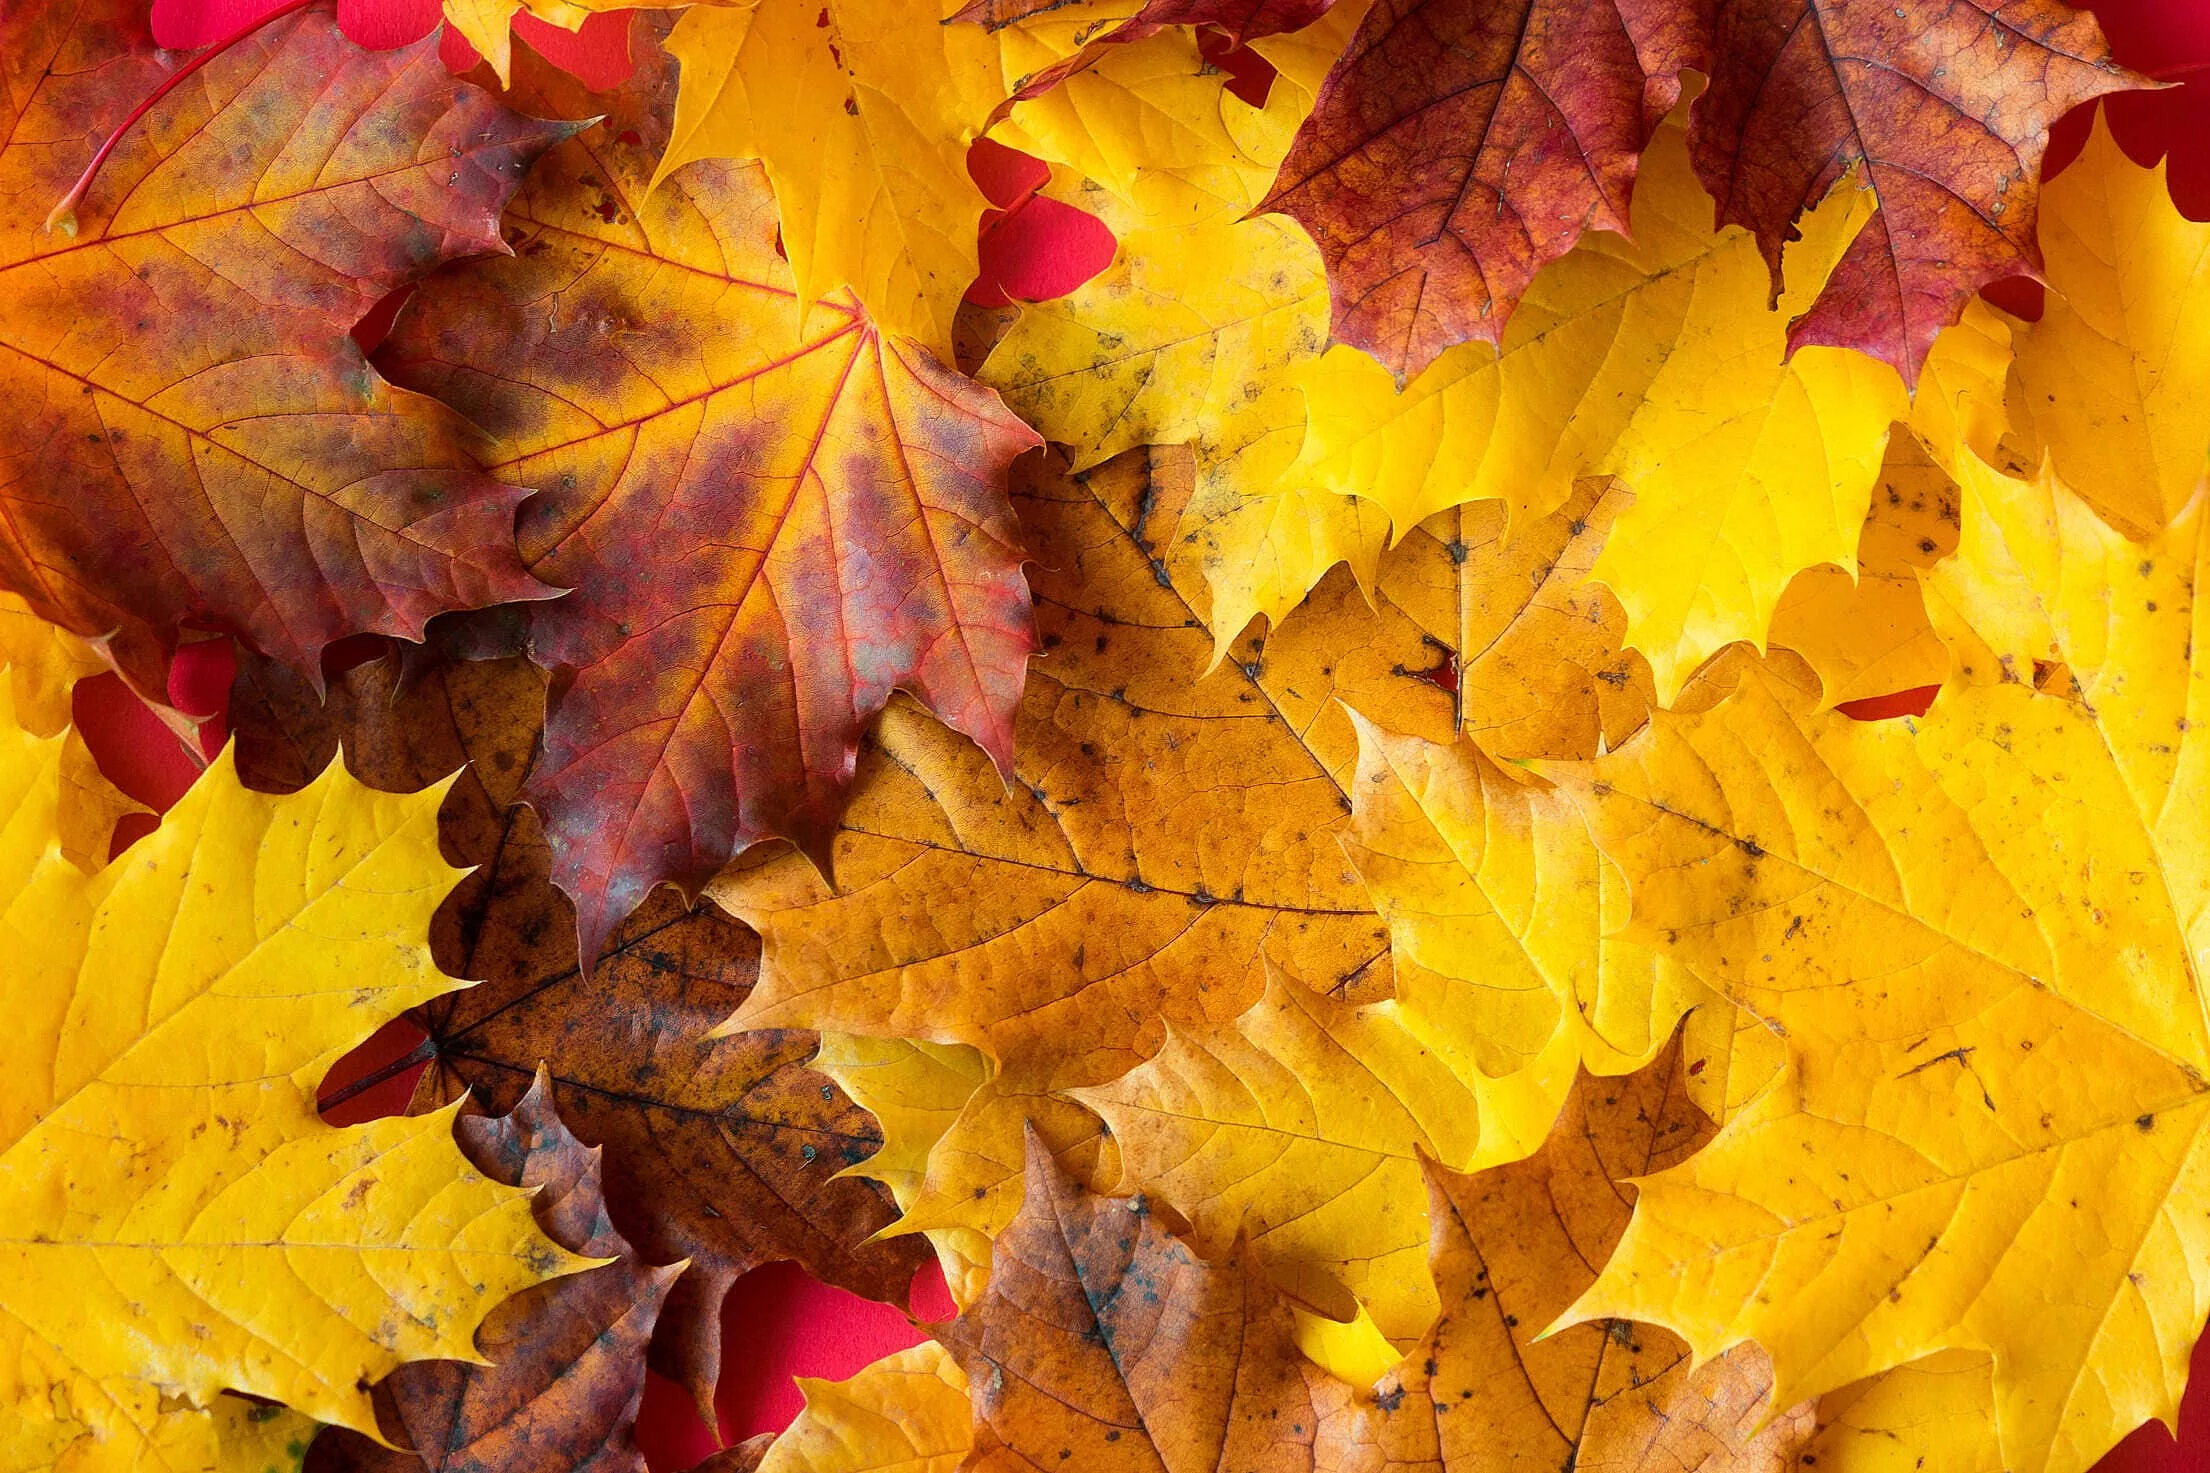 fall-autumn-leaves-close-up-free-photo-2210x1473-1692627